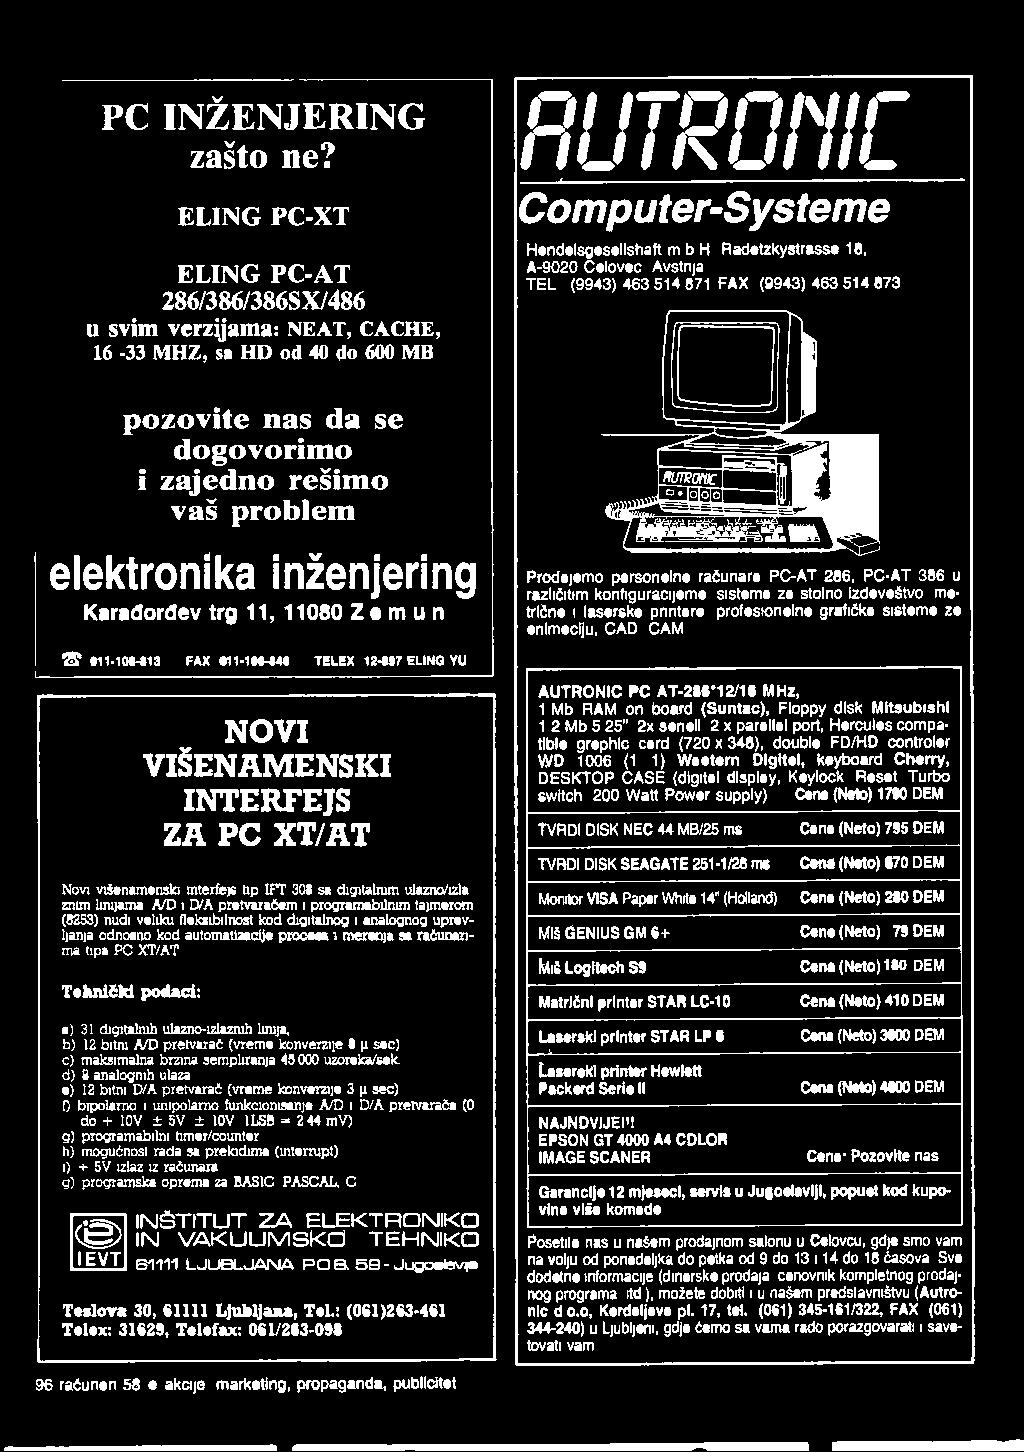 . 1 Mb RAM on board (Suntac), Floppy disk Mitsubishi switch, 200 Watt Power supply) Monitor VISA Paper WhKe 1 4' (Hoisnd Matridnl printer STAR LC-10 LaserskI printer STAR LP 6 LaserskI printer